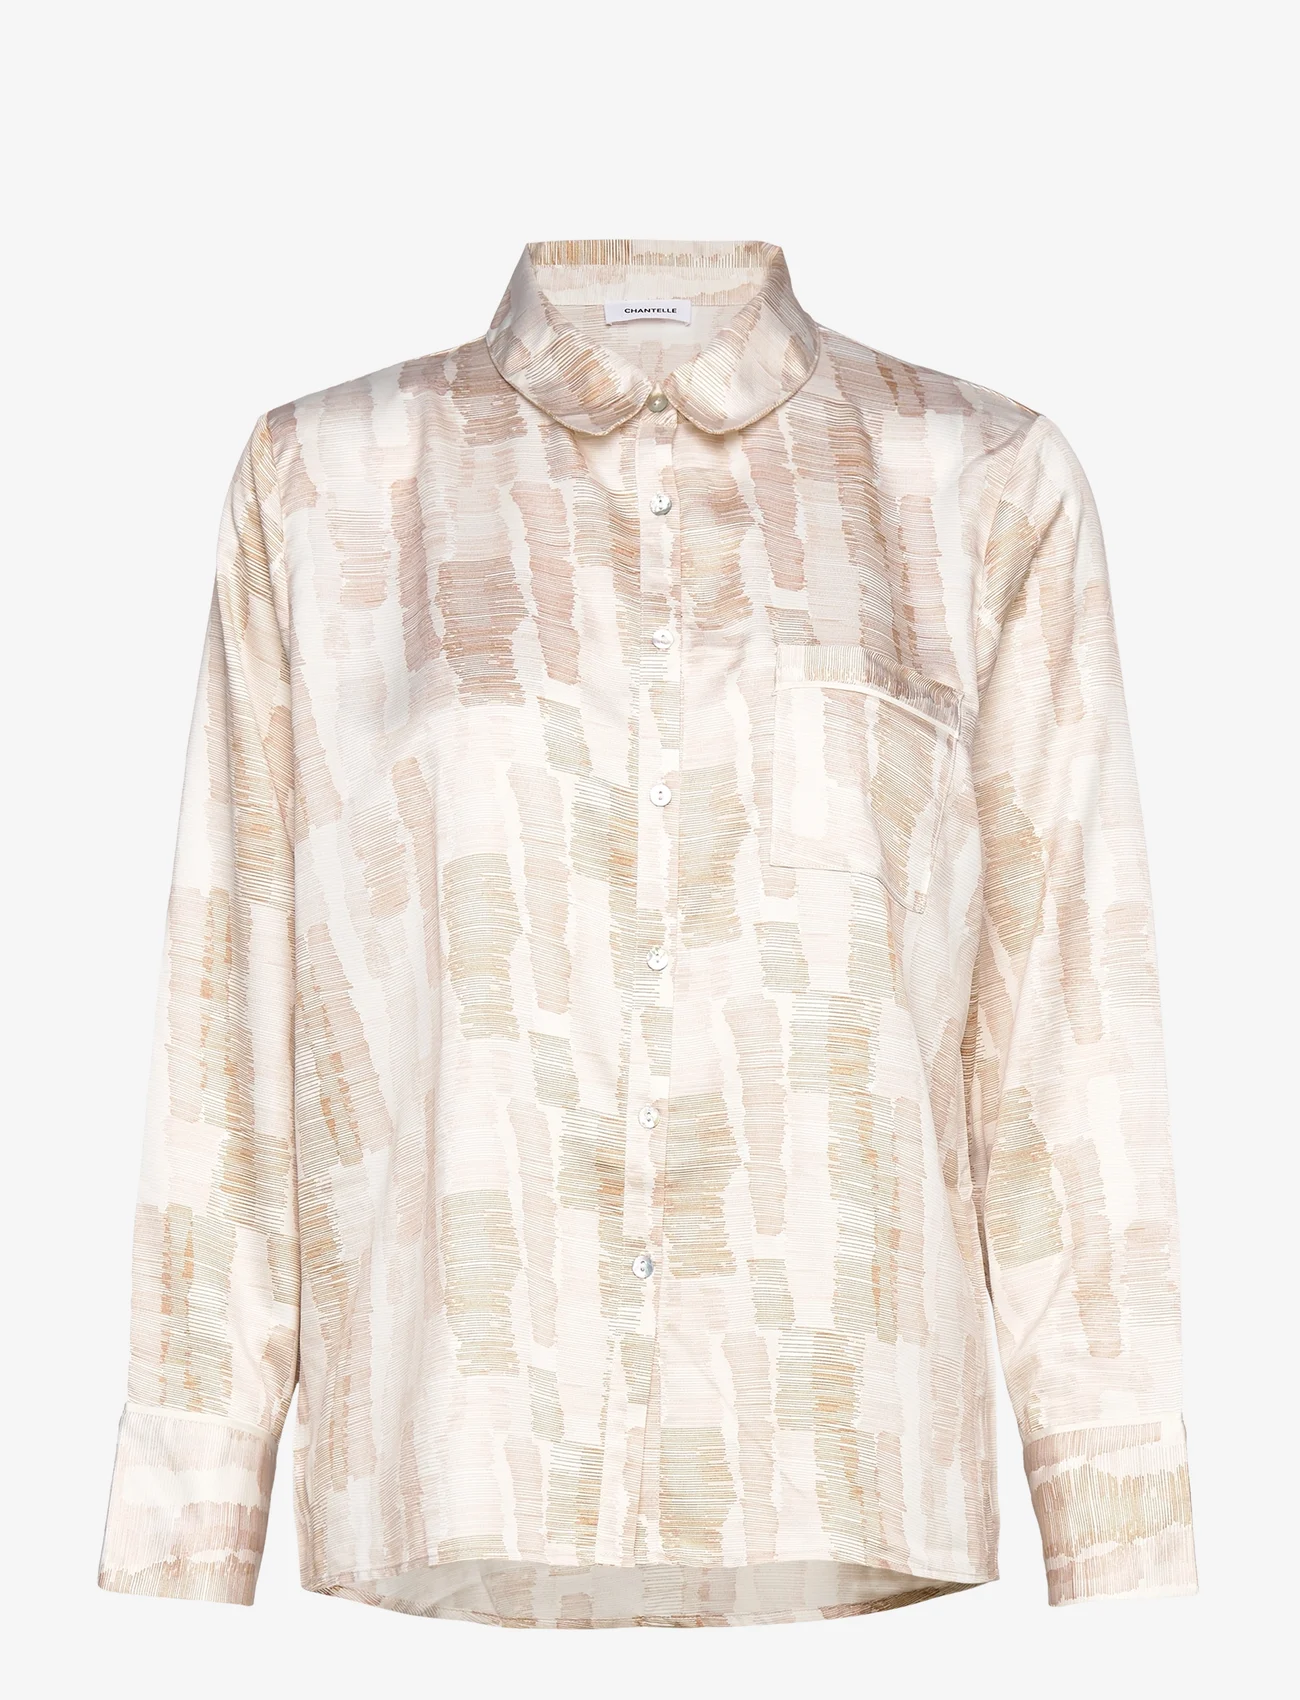 CHANTELLE - Quarts Shirt Long Sleeve - oberteile - abstract print - 0